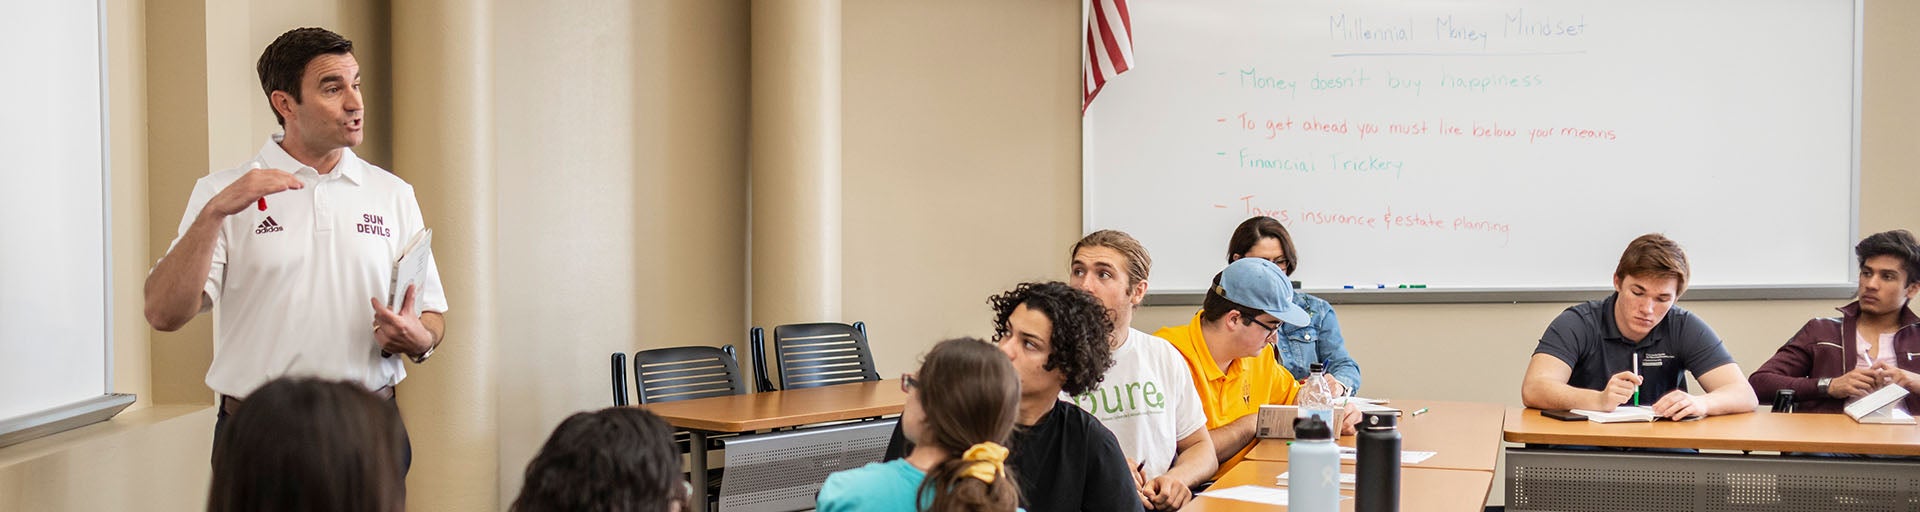 Barrett alumni lecturing Barrett students in a classroom environment